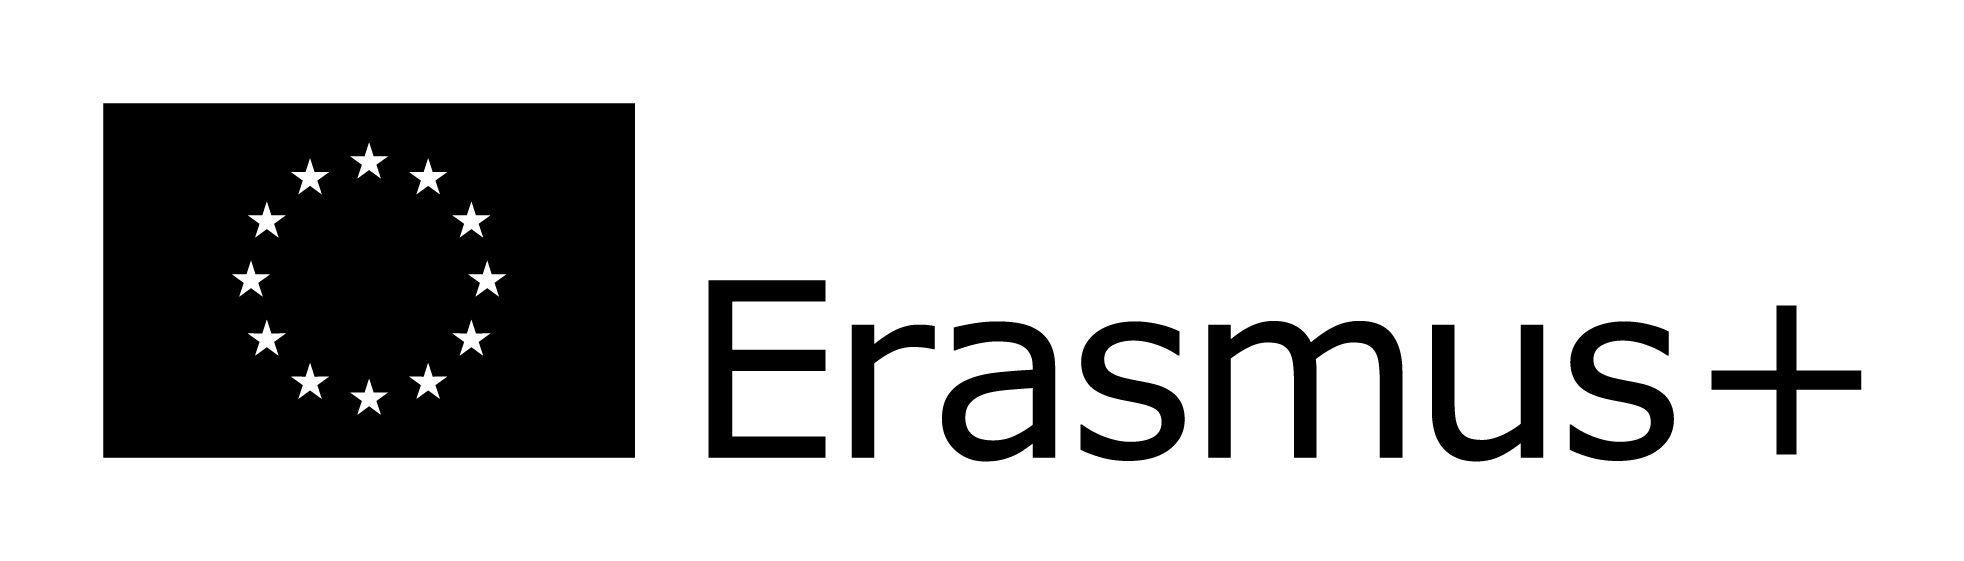 Black and White Evaluation Logo - Promotion and dissemination | Erasmus+